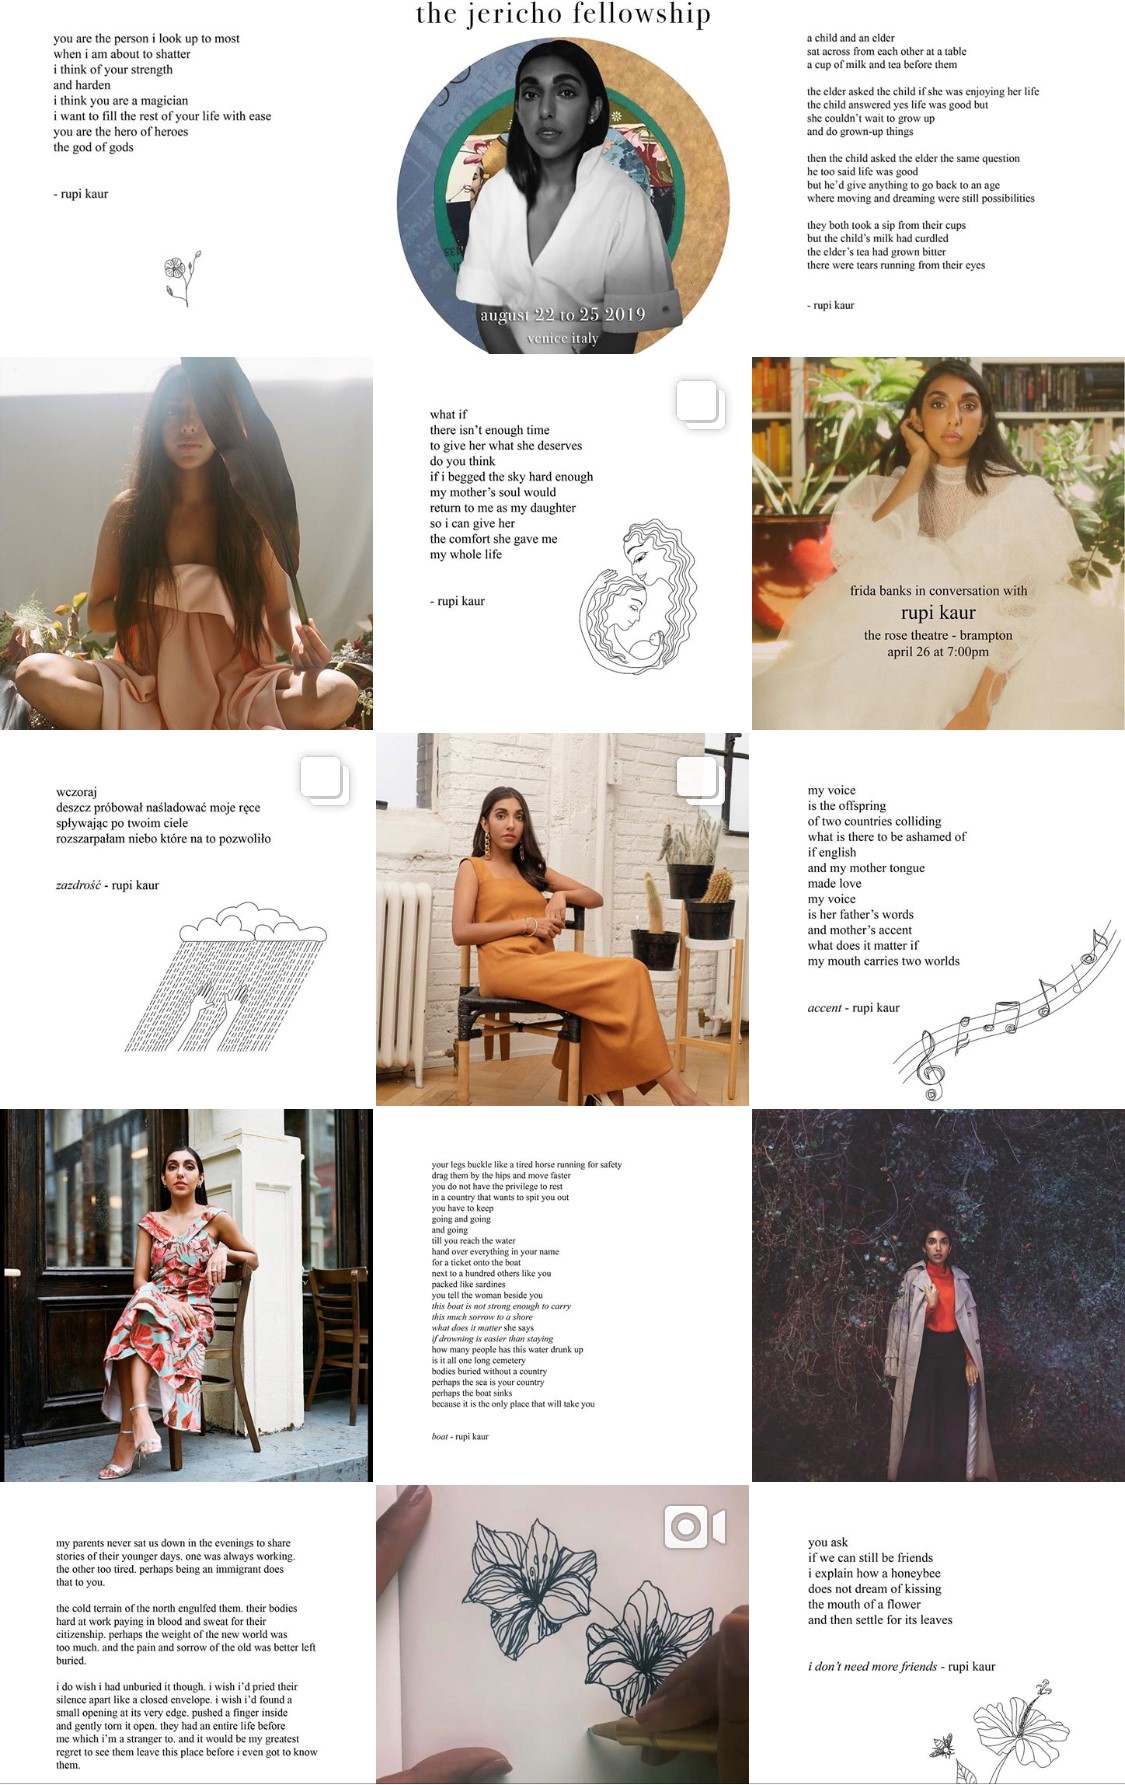 The Handwritten Styles of Instagram Poetry « Post45